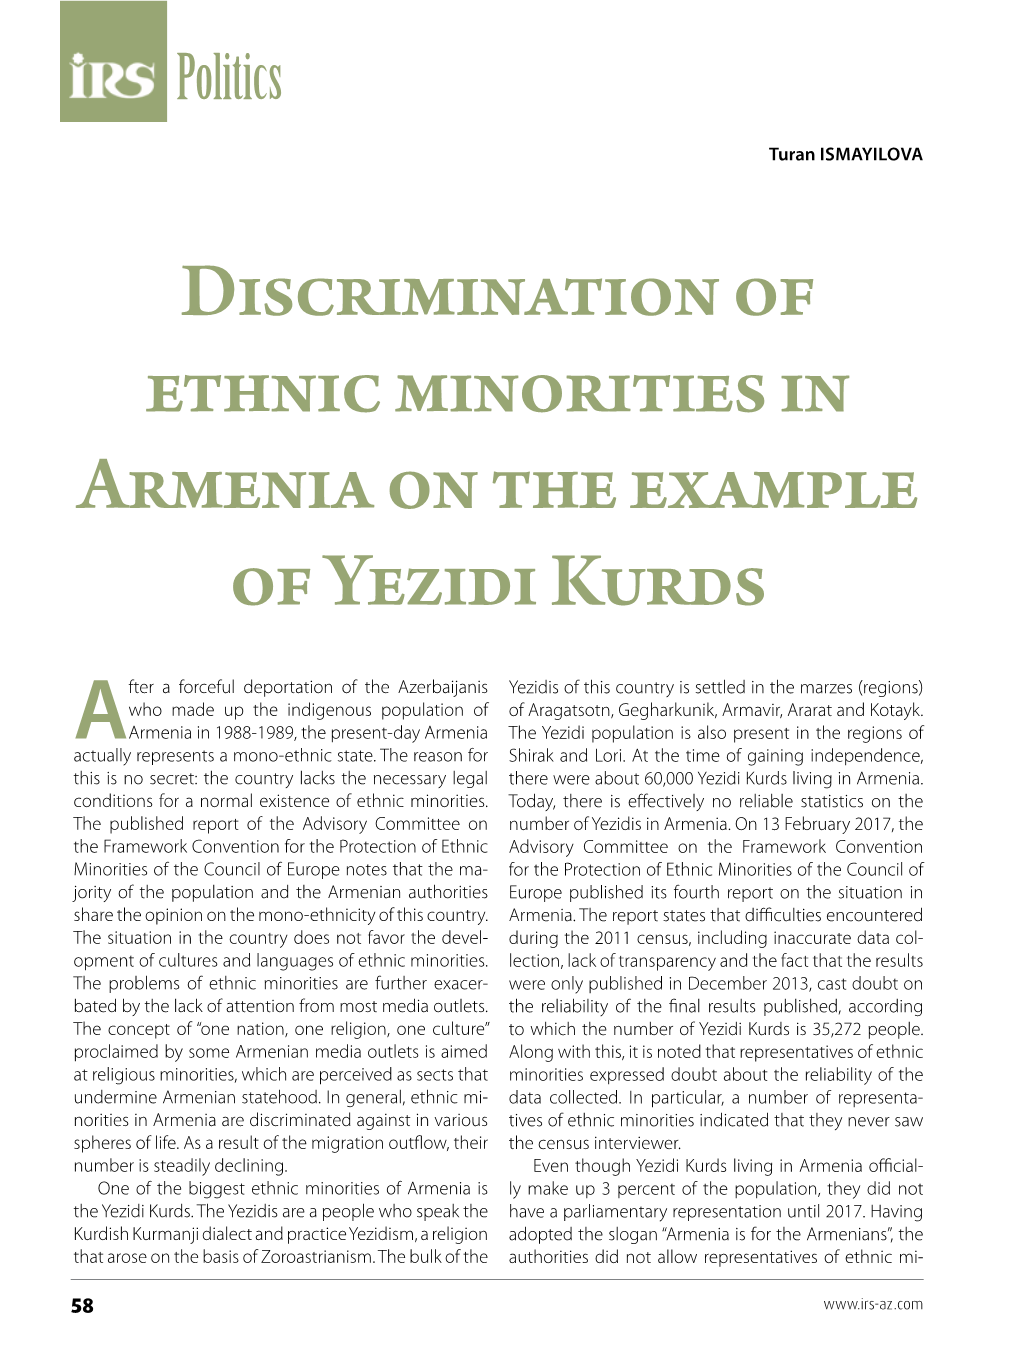 Discrimination of Ethnic Minorities in Armenia on the Example of Yezidi Kurds